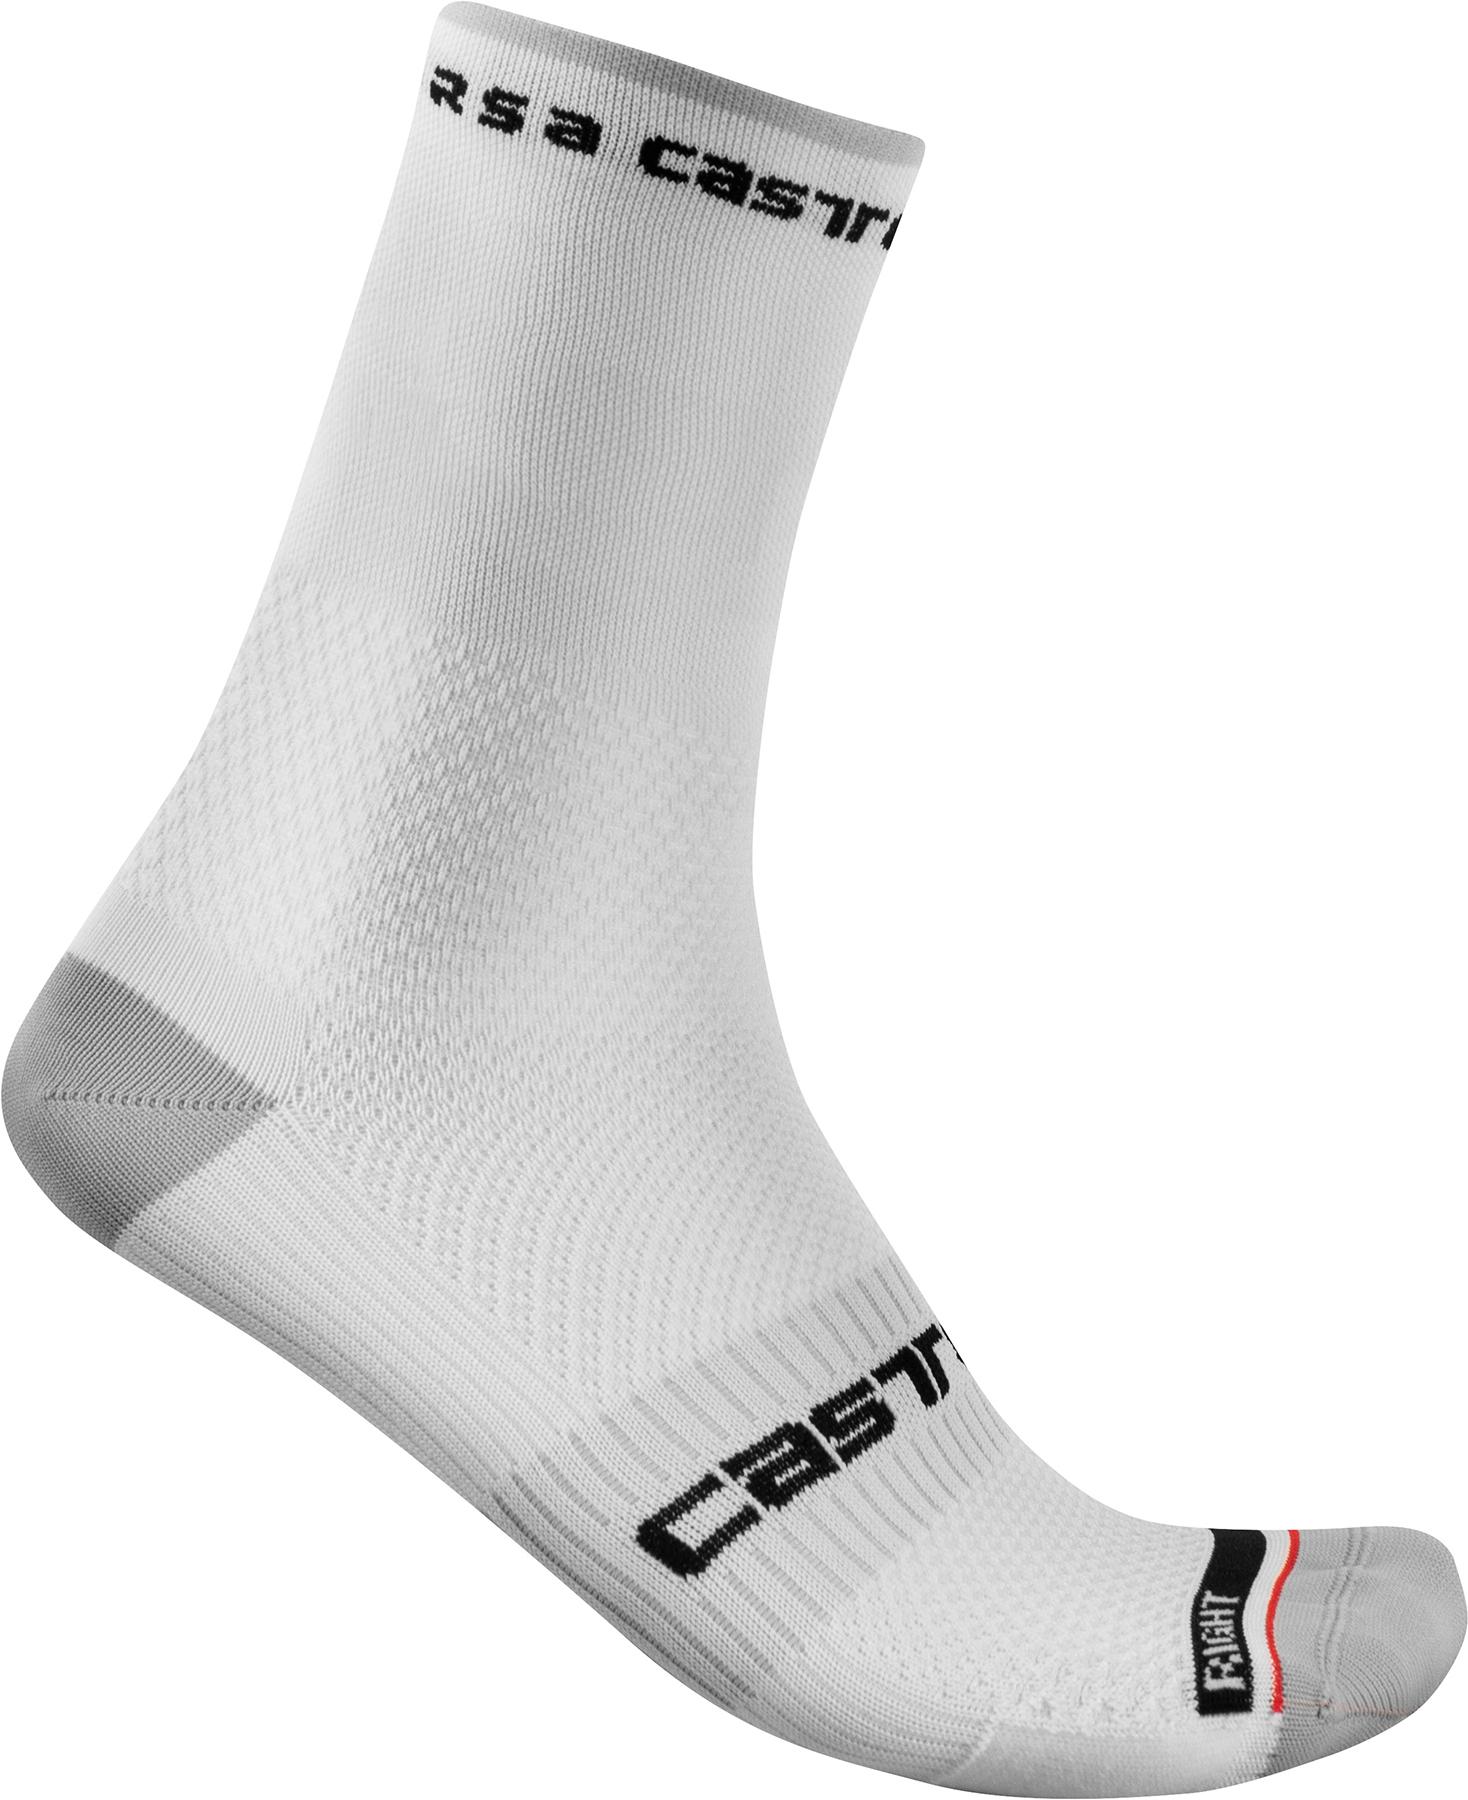 Castelli Rosso Corsa Pro 15 Cycling Socks - White